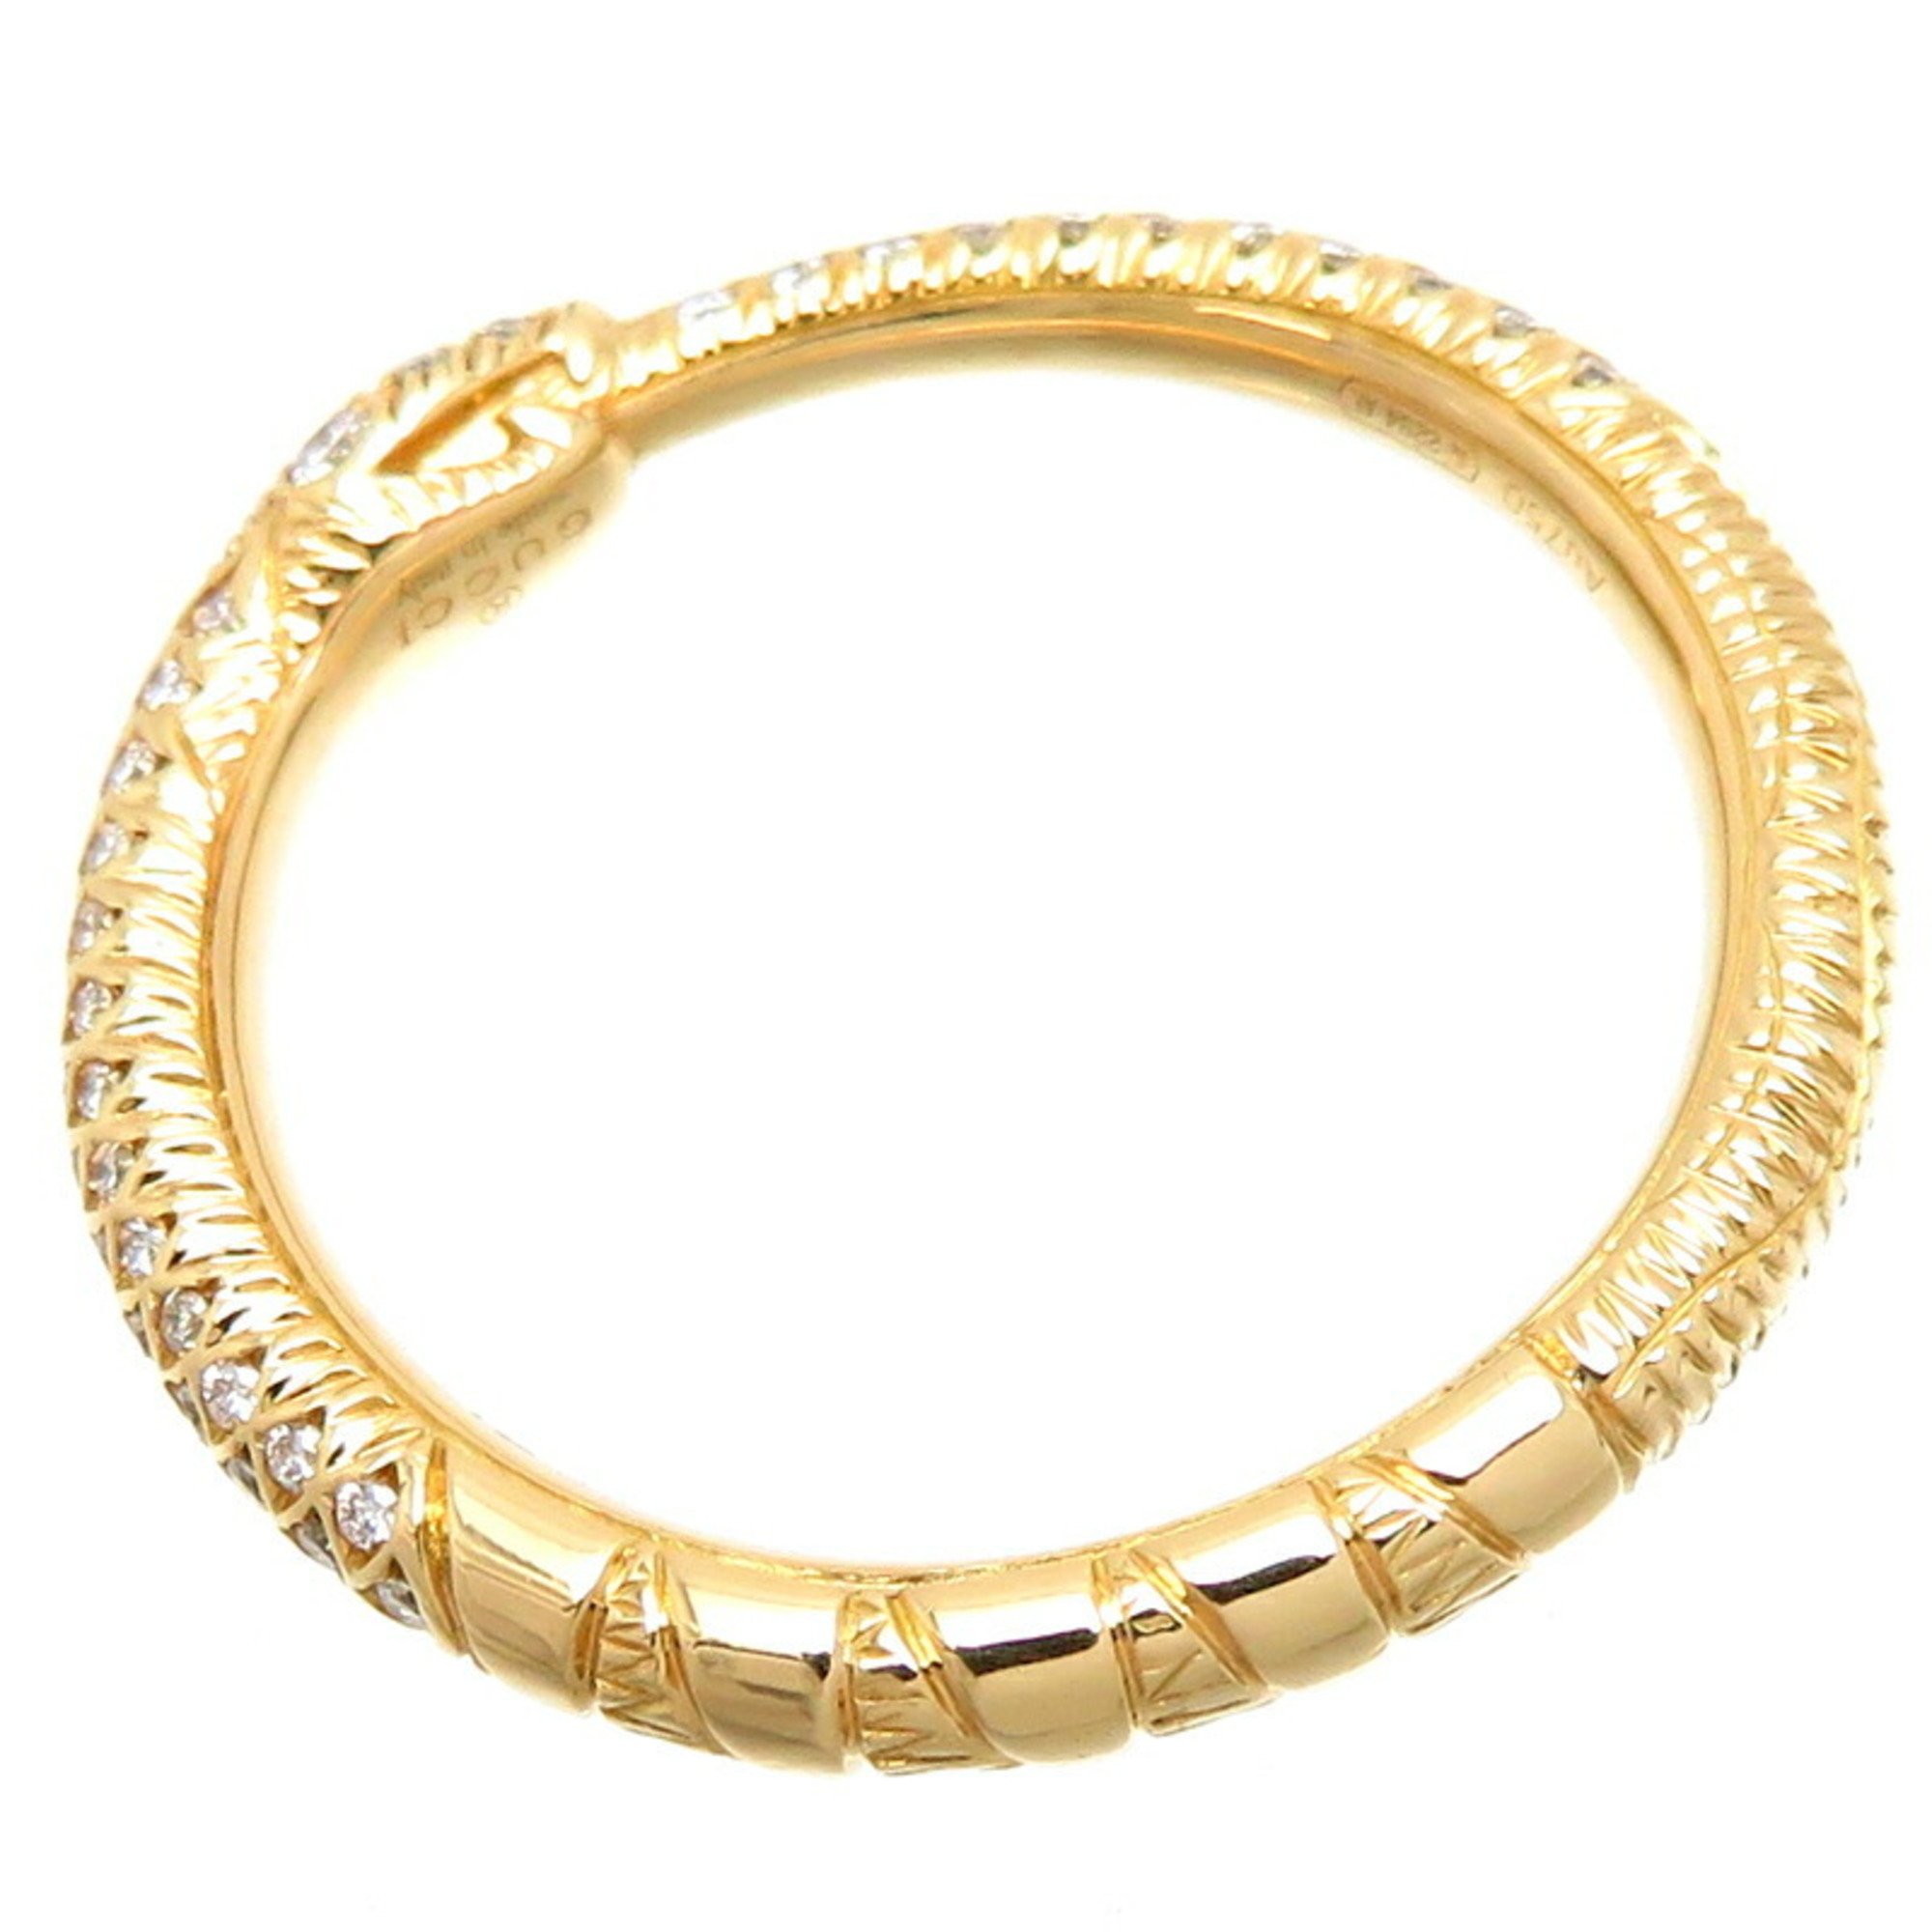 Gucci 750YG Ouroboros Diamond Women's Ring 750 Yellow Gold No. 11.5